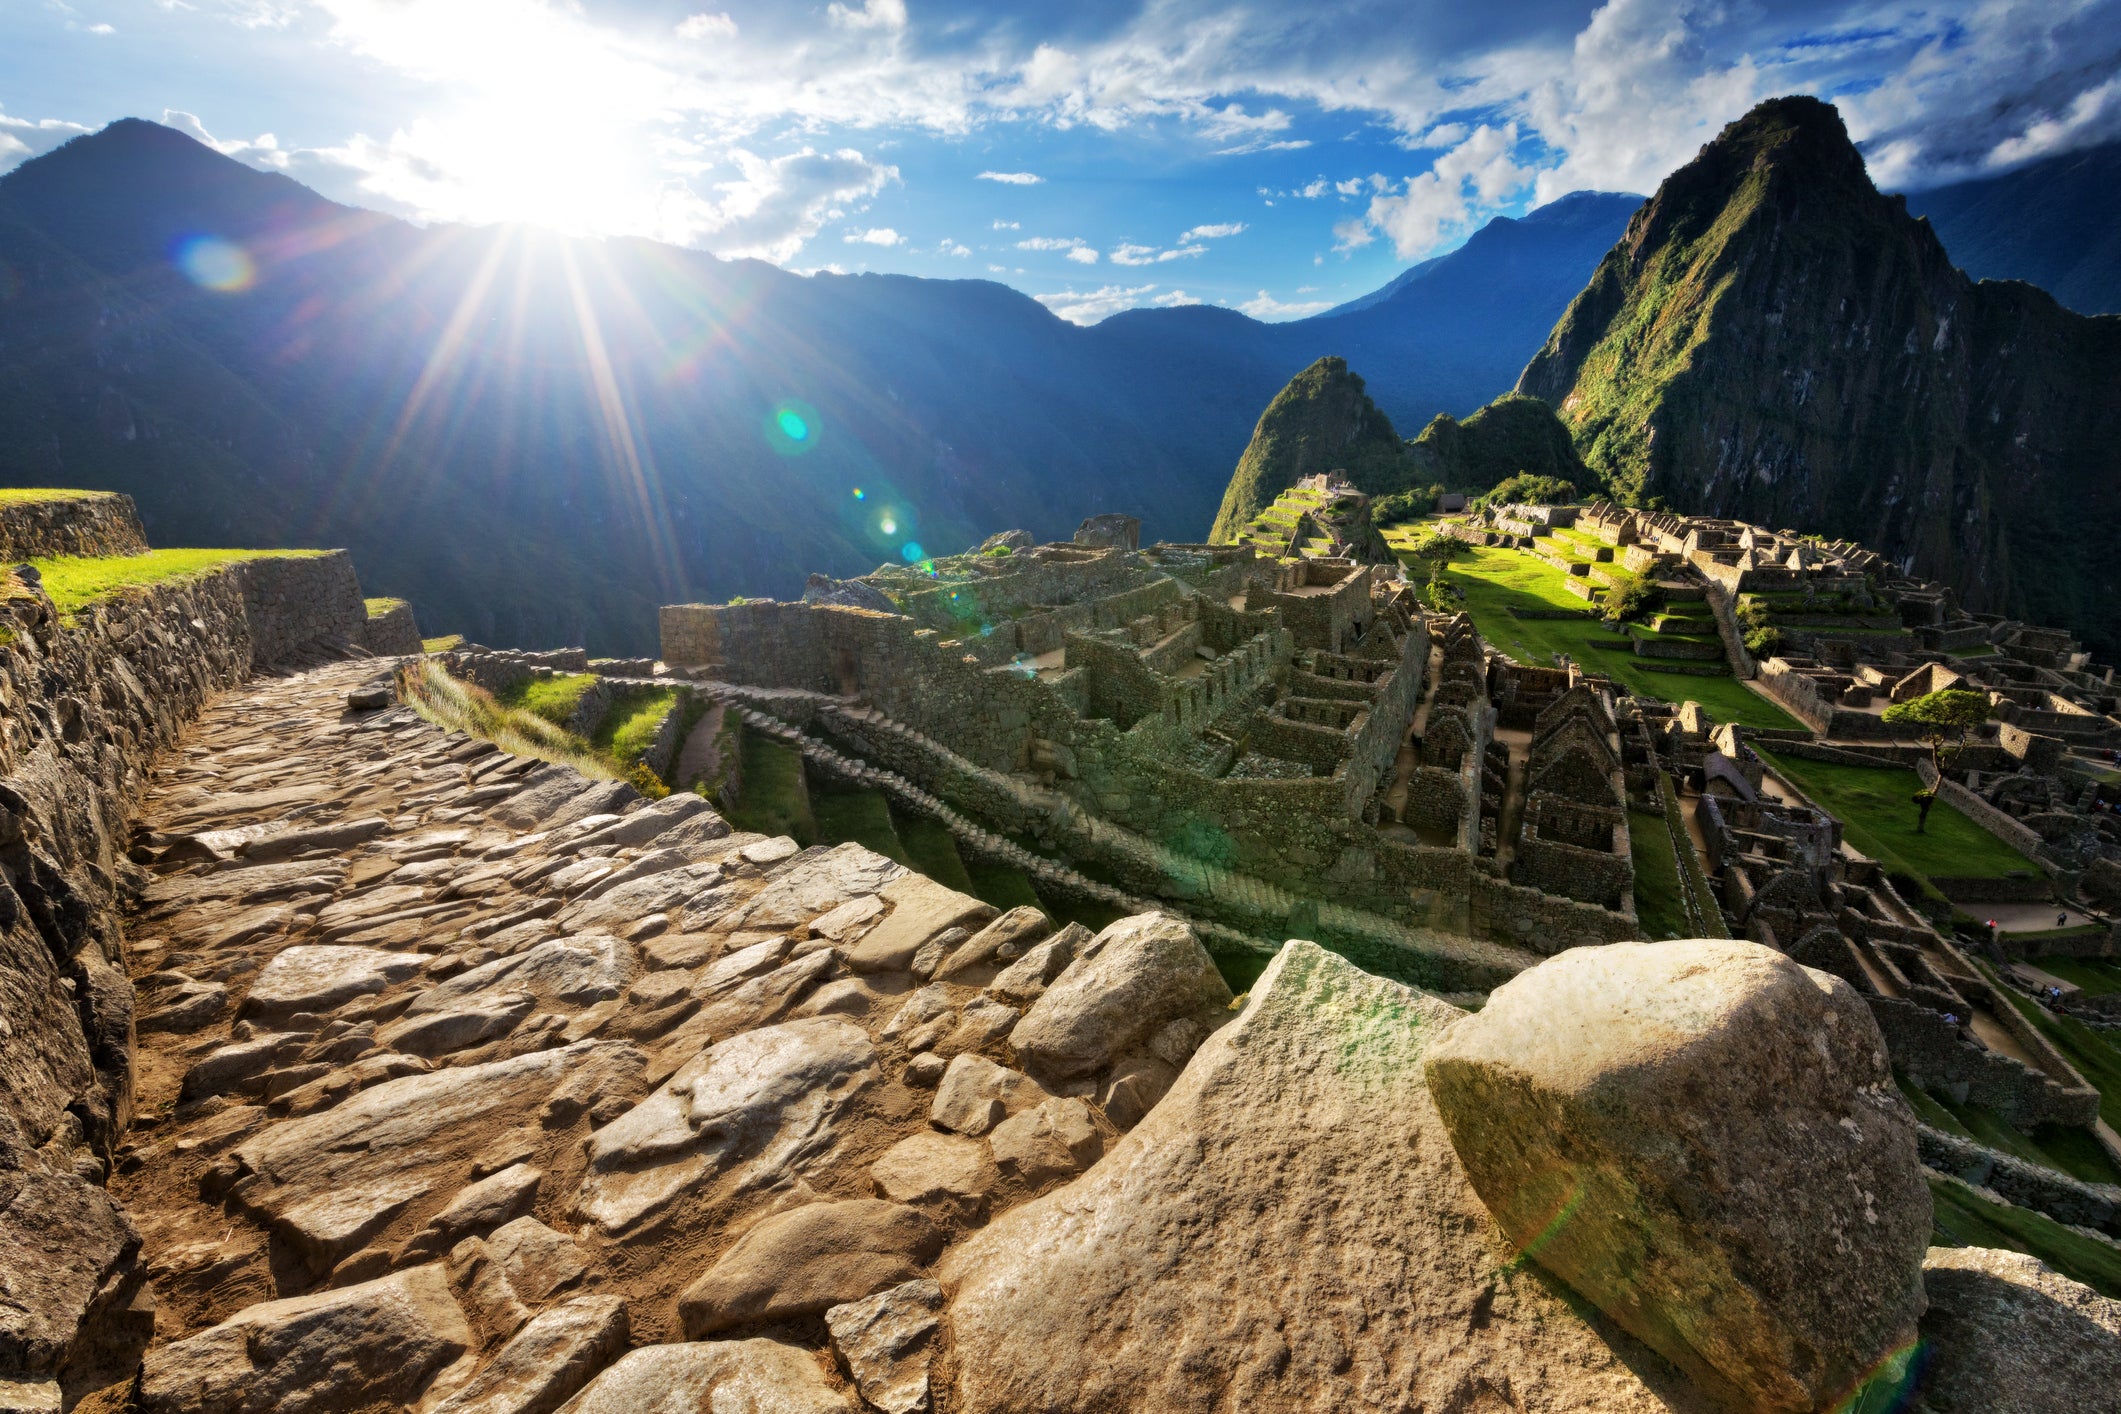 Evening sunburst over deserted paved pathway overlooking Machu Picchu ruins, Peru